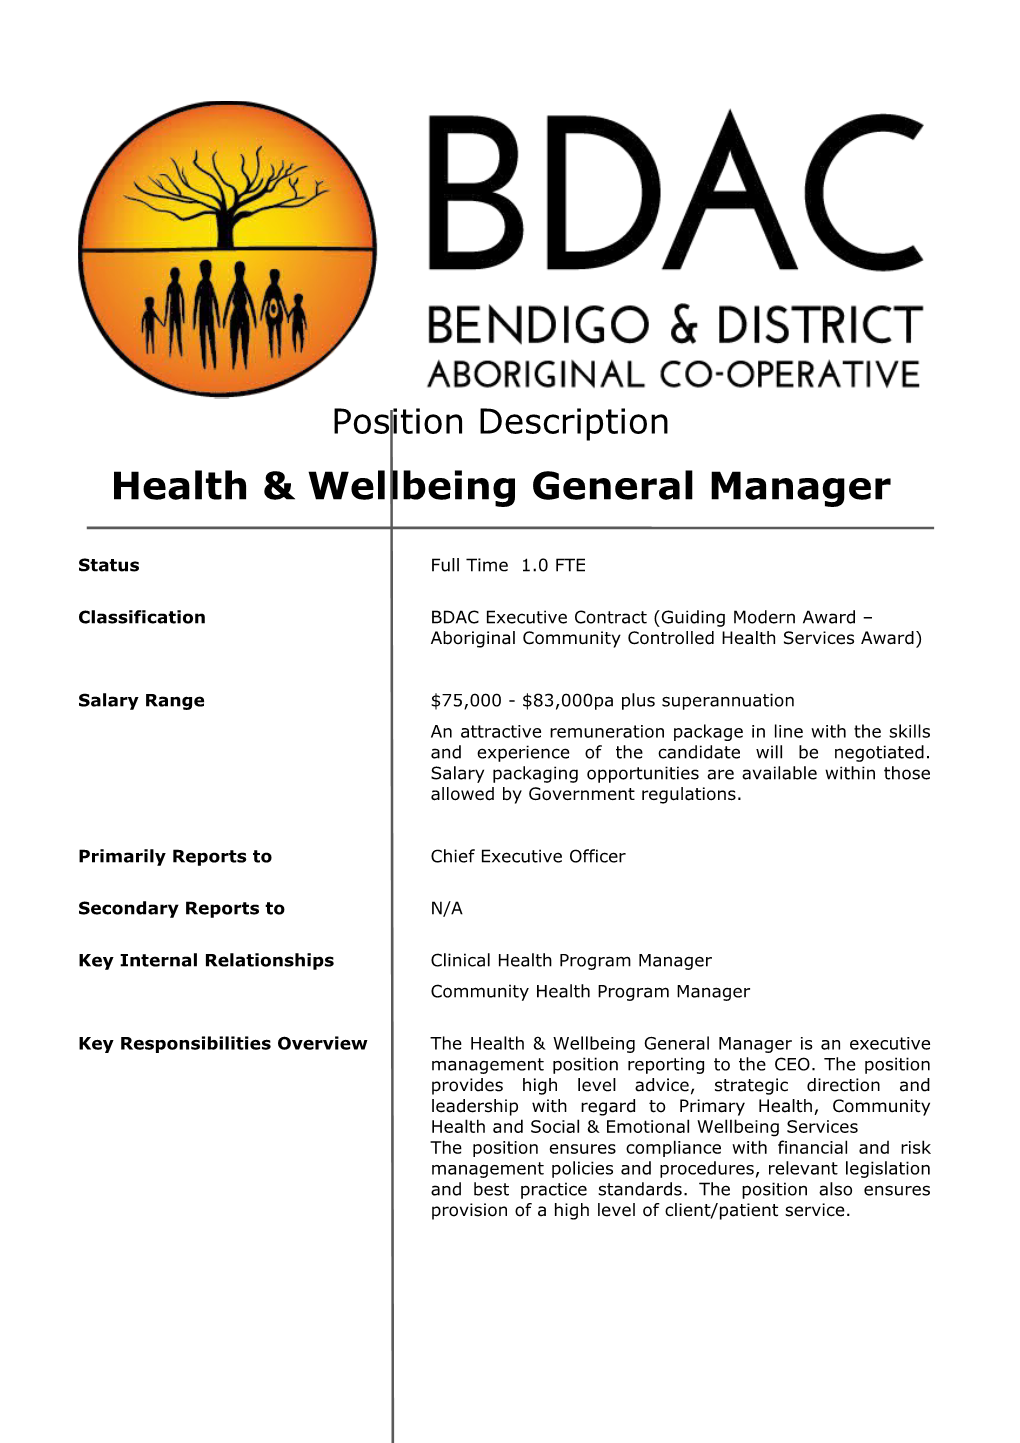 The Bendigo & District Aboriginal